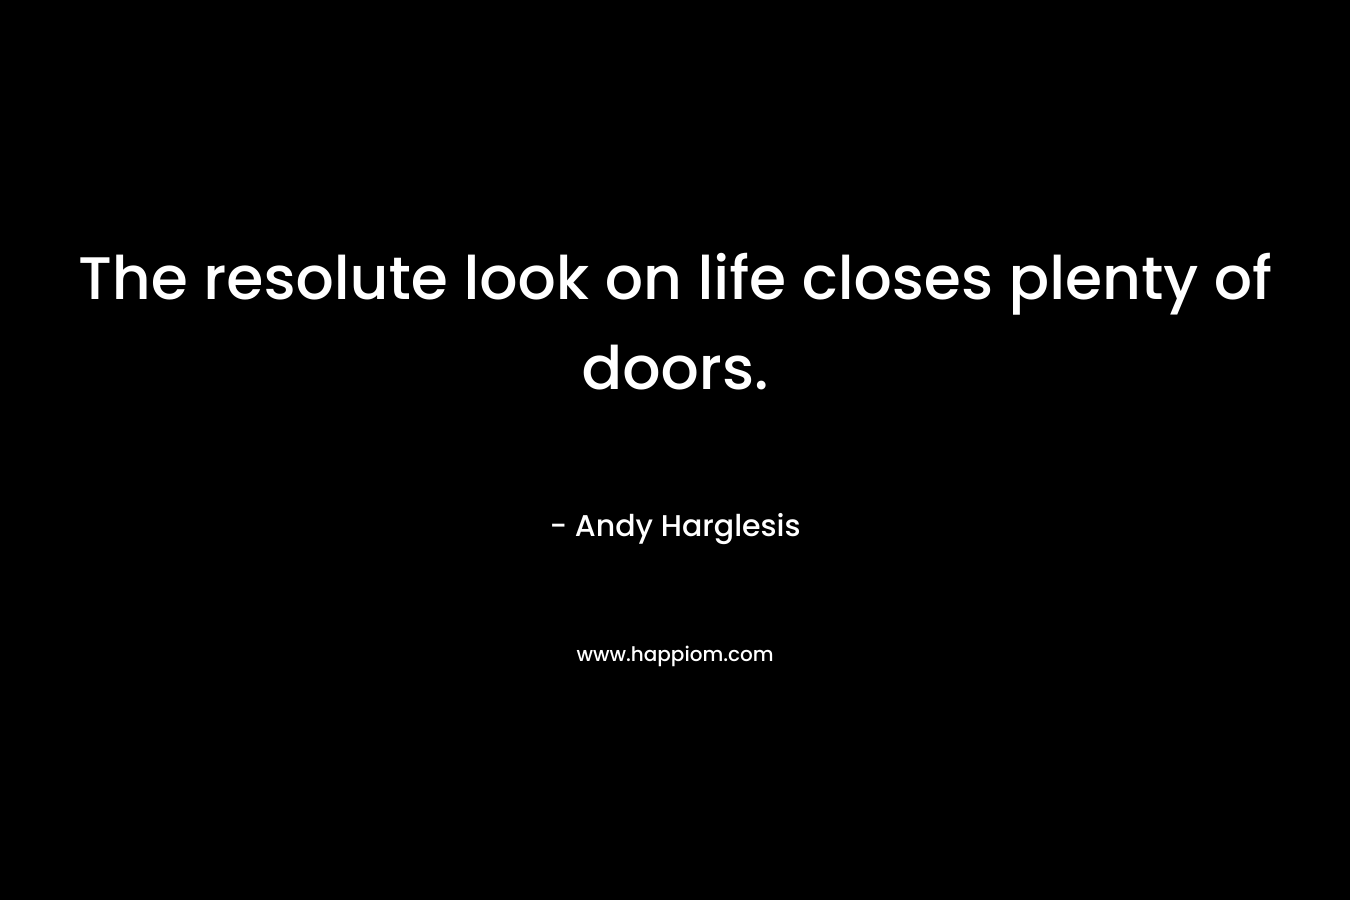 The resolute look on life closes plenty of doors.